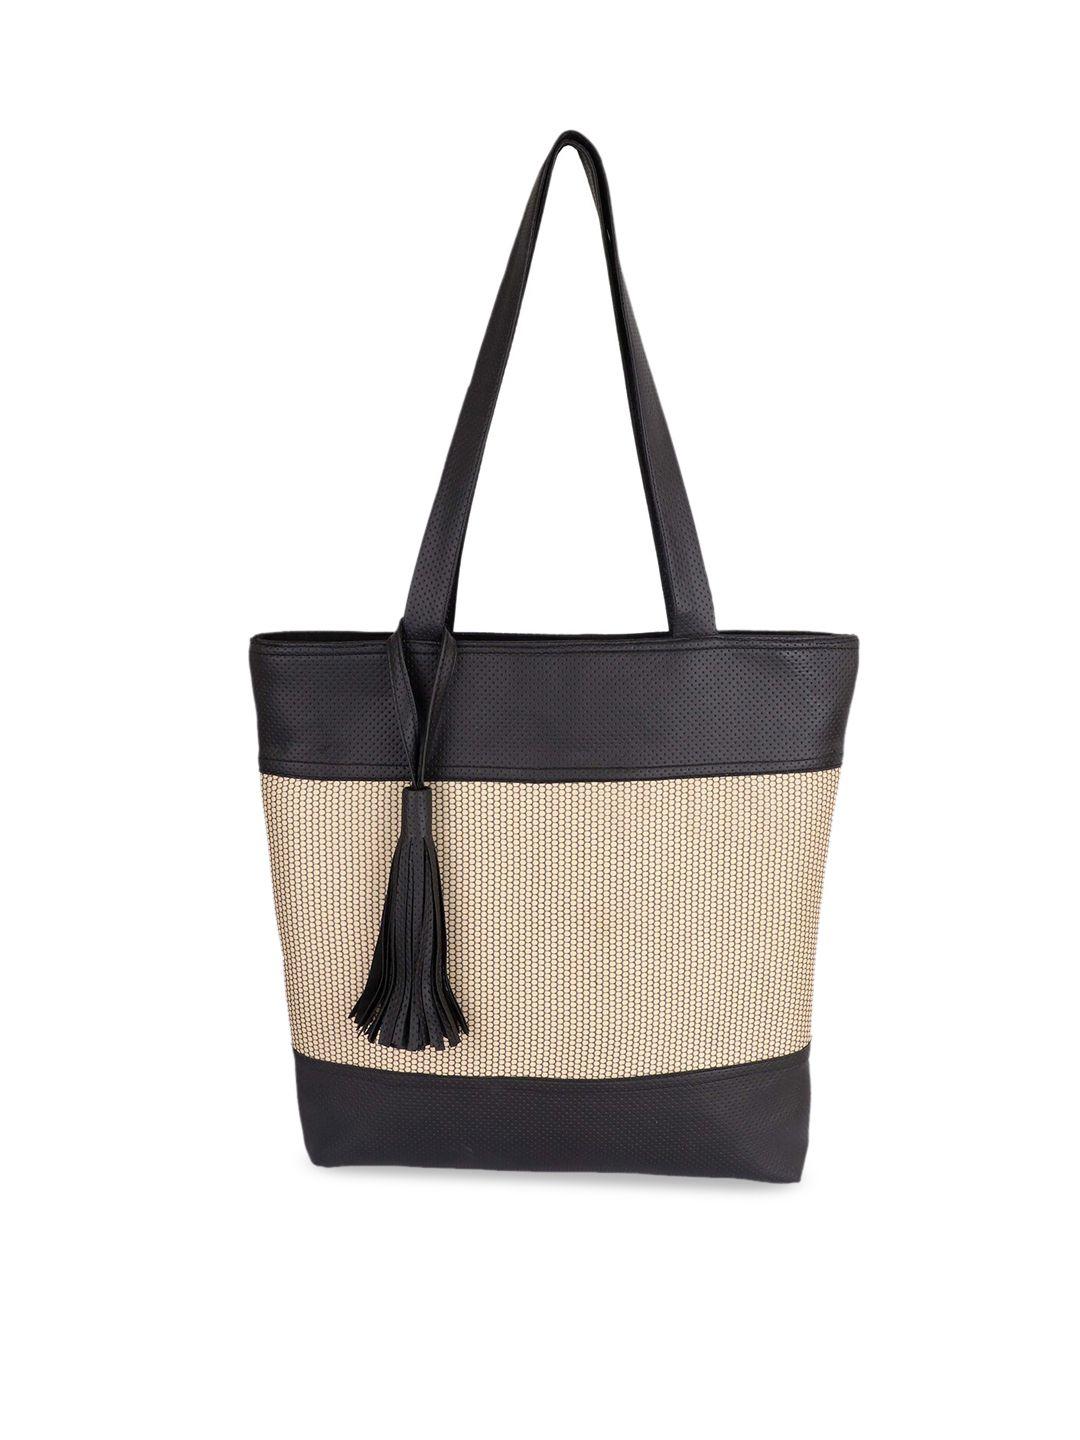 rezzy black & beige colourblocked tote bag